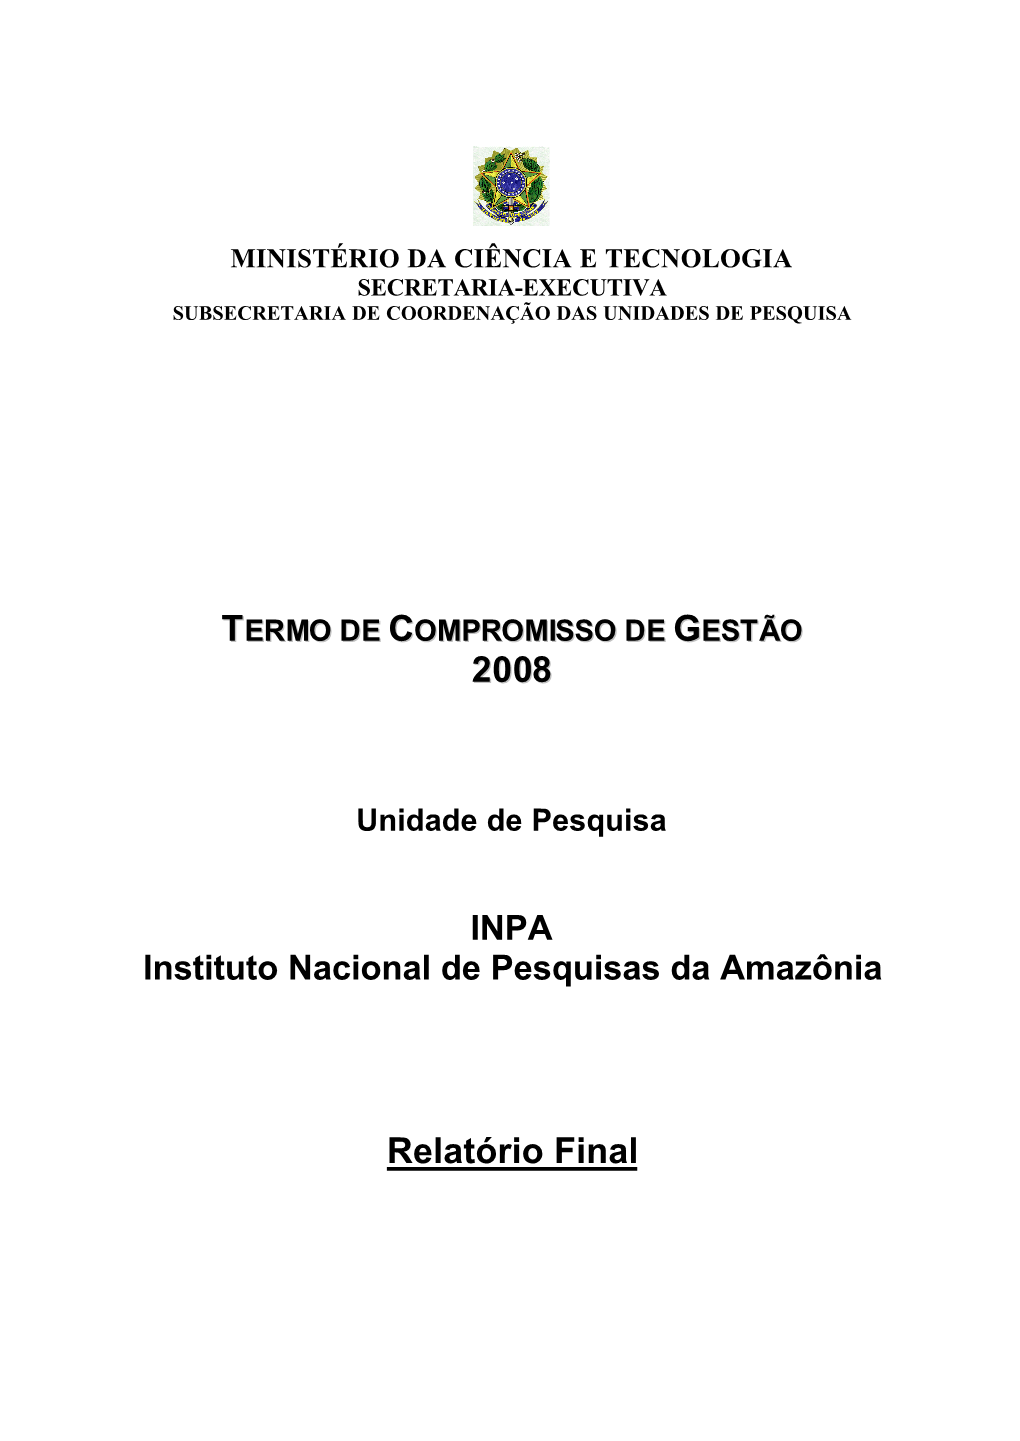 INPA Relatorio 2008